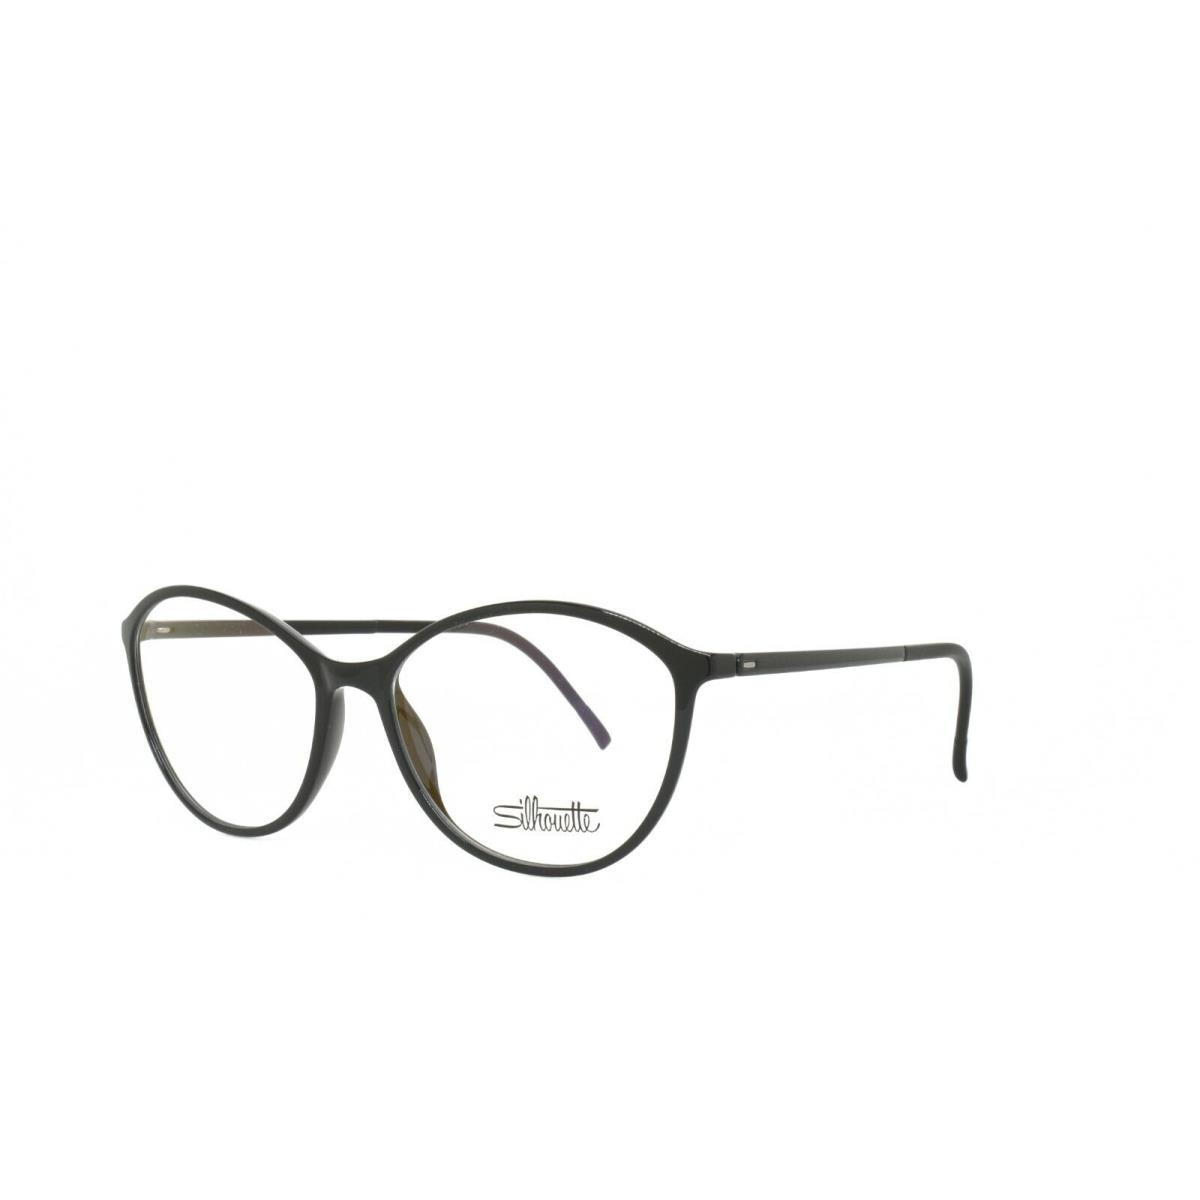 Silhouette Spx Illusion 1584 75 9010 Eyeglasses 54-15-135 Black